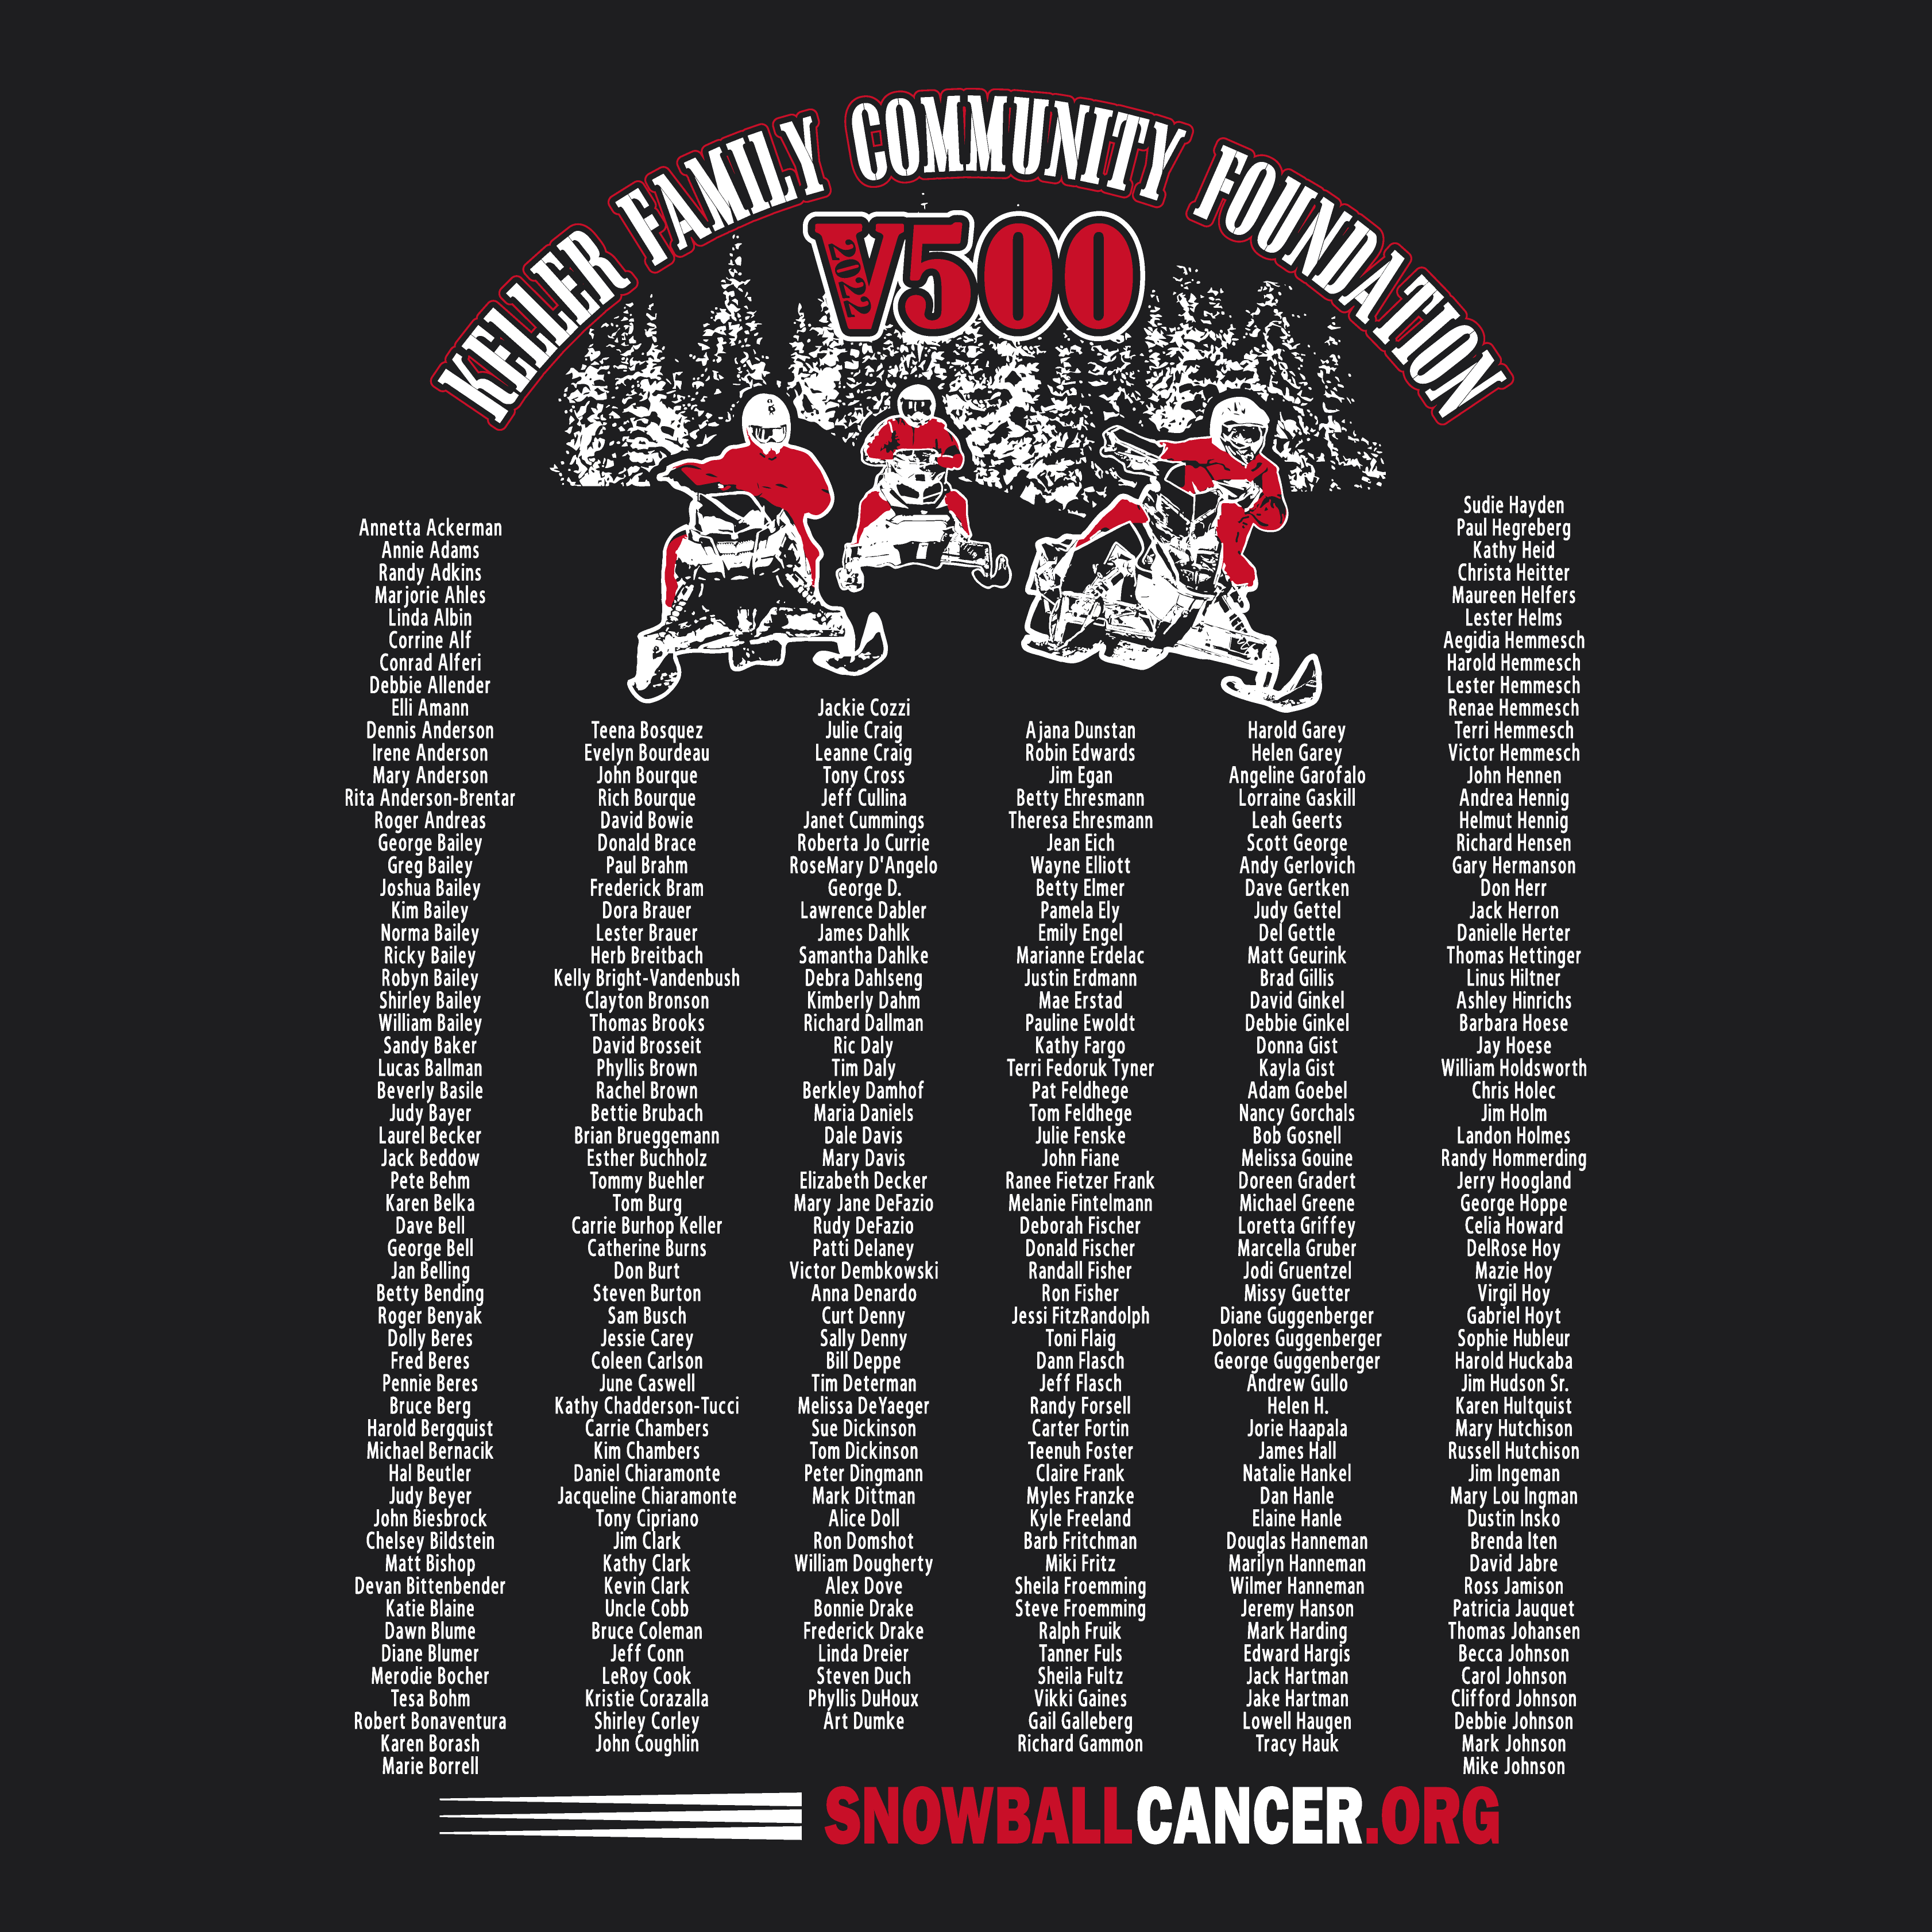 SnowballCancer.org Show your support for those battling cancer! shirt design - zoomed